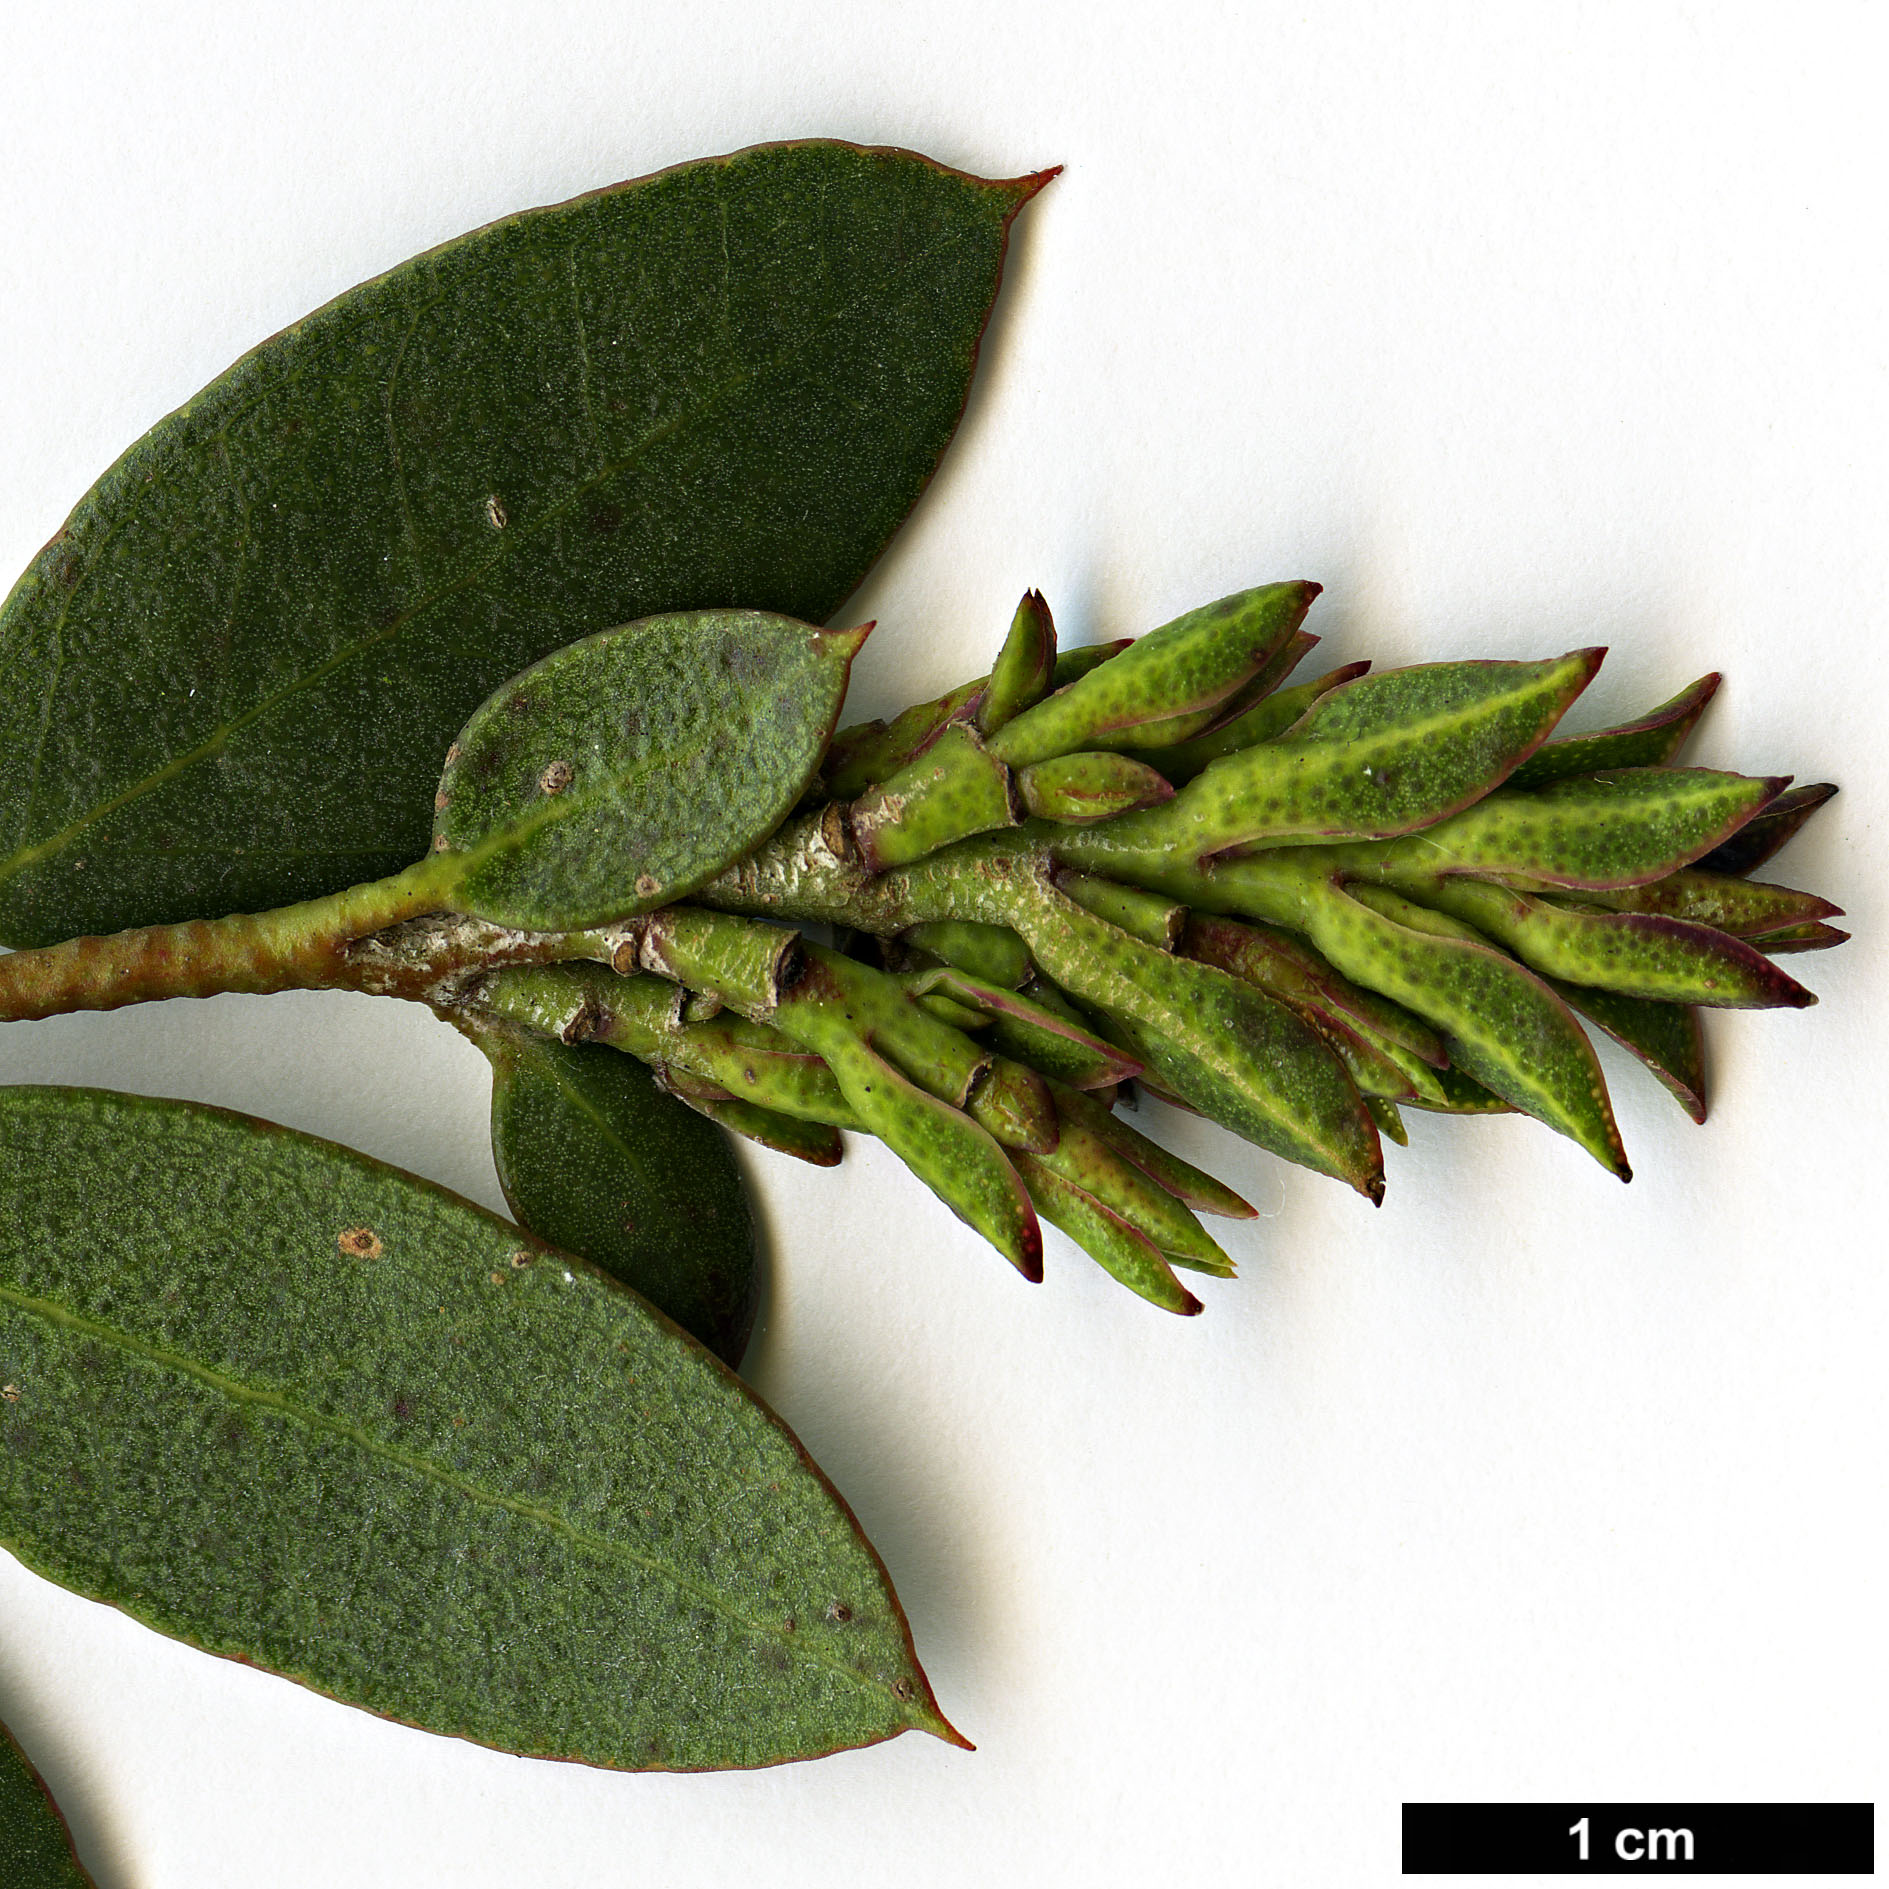 High resolution image: Family: Myrtaceae - Genus: Eucalyptus - Taxon: vernicosa